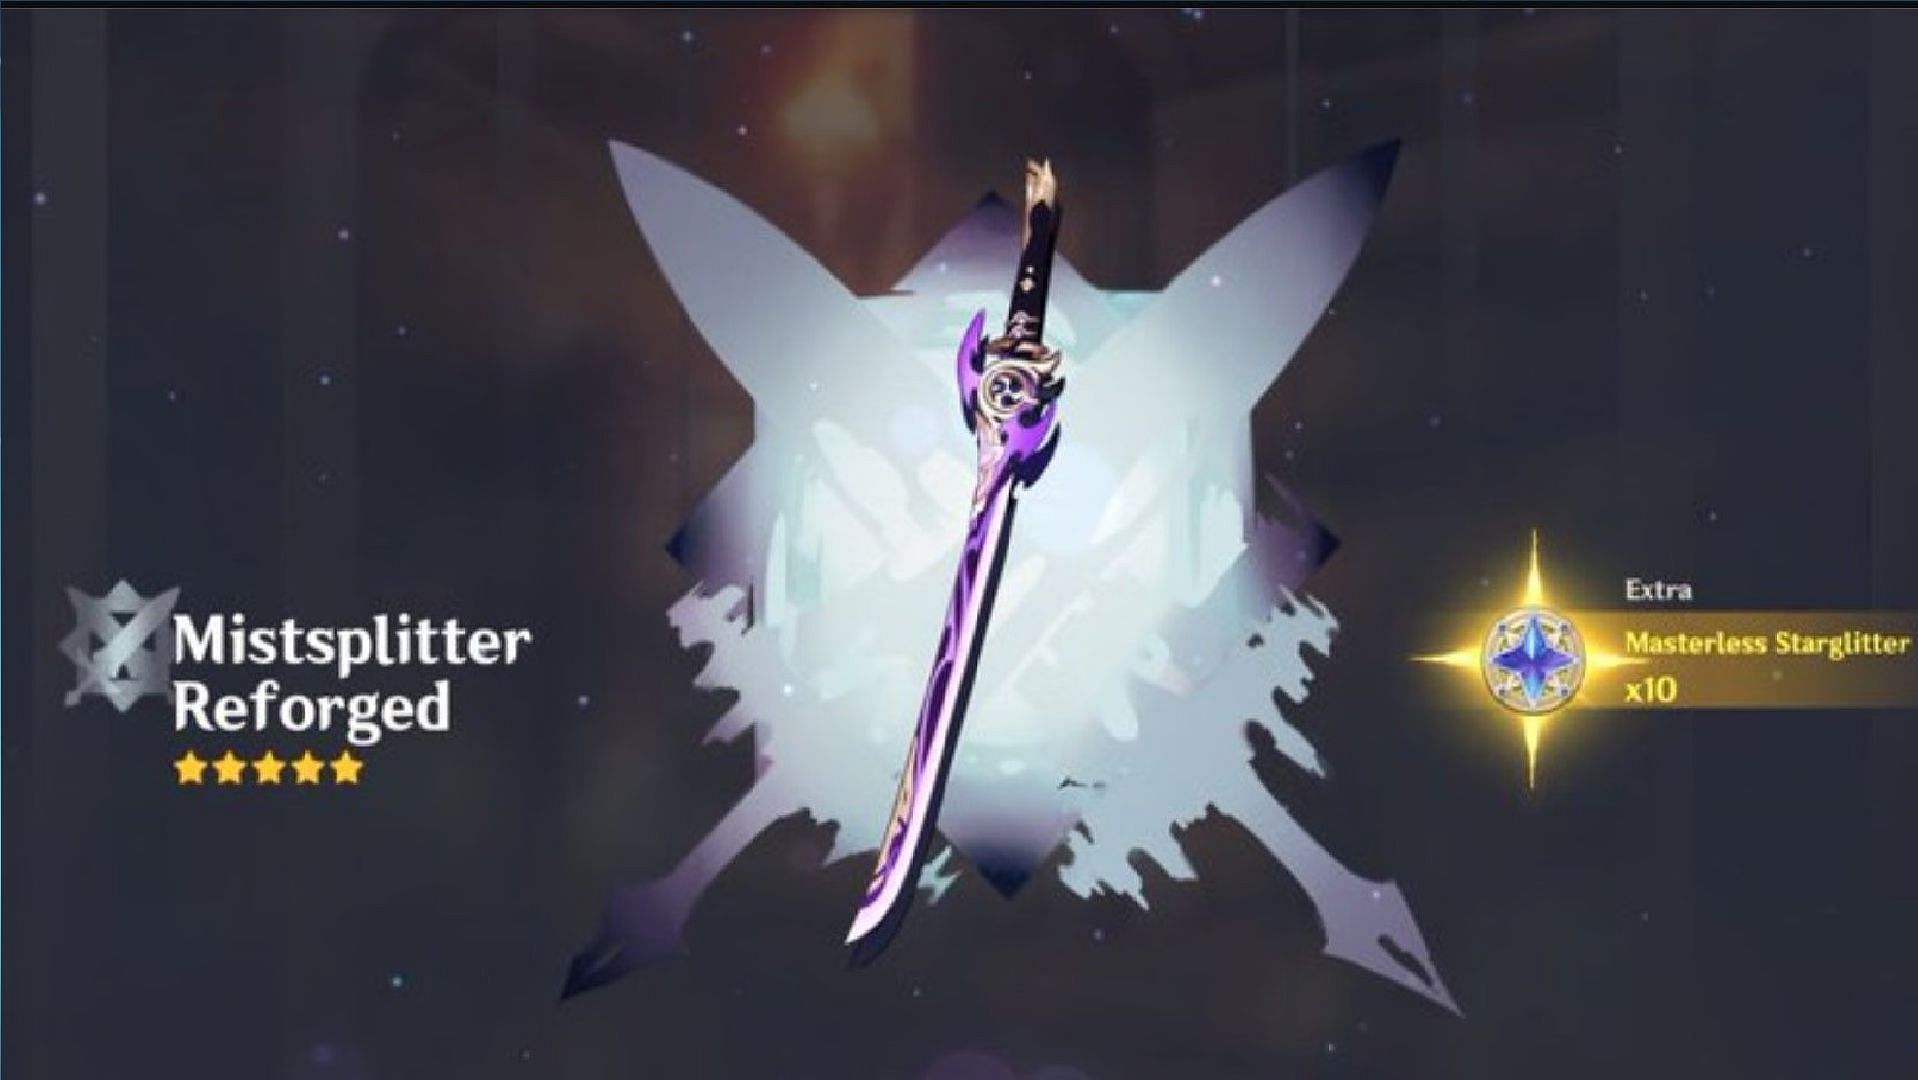 Mistsplitter Reforged is a 5-star sword (Image via HoYoverse)